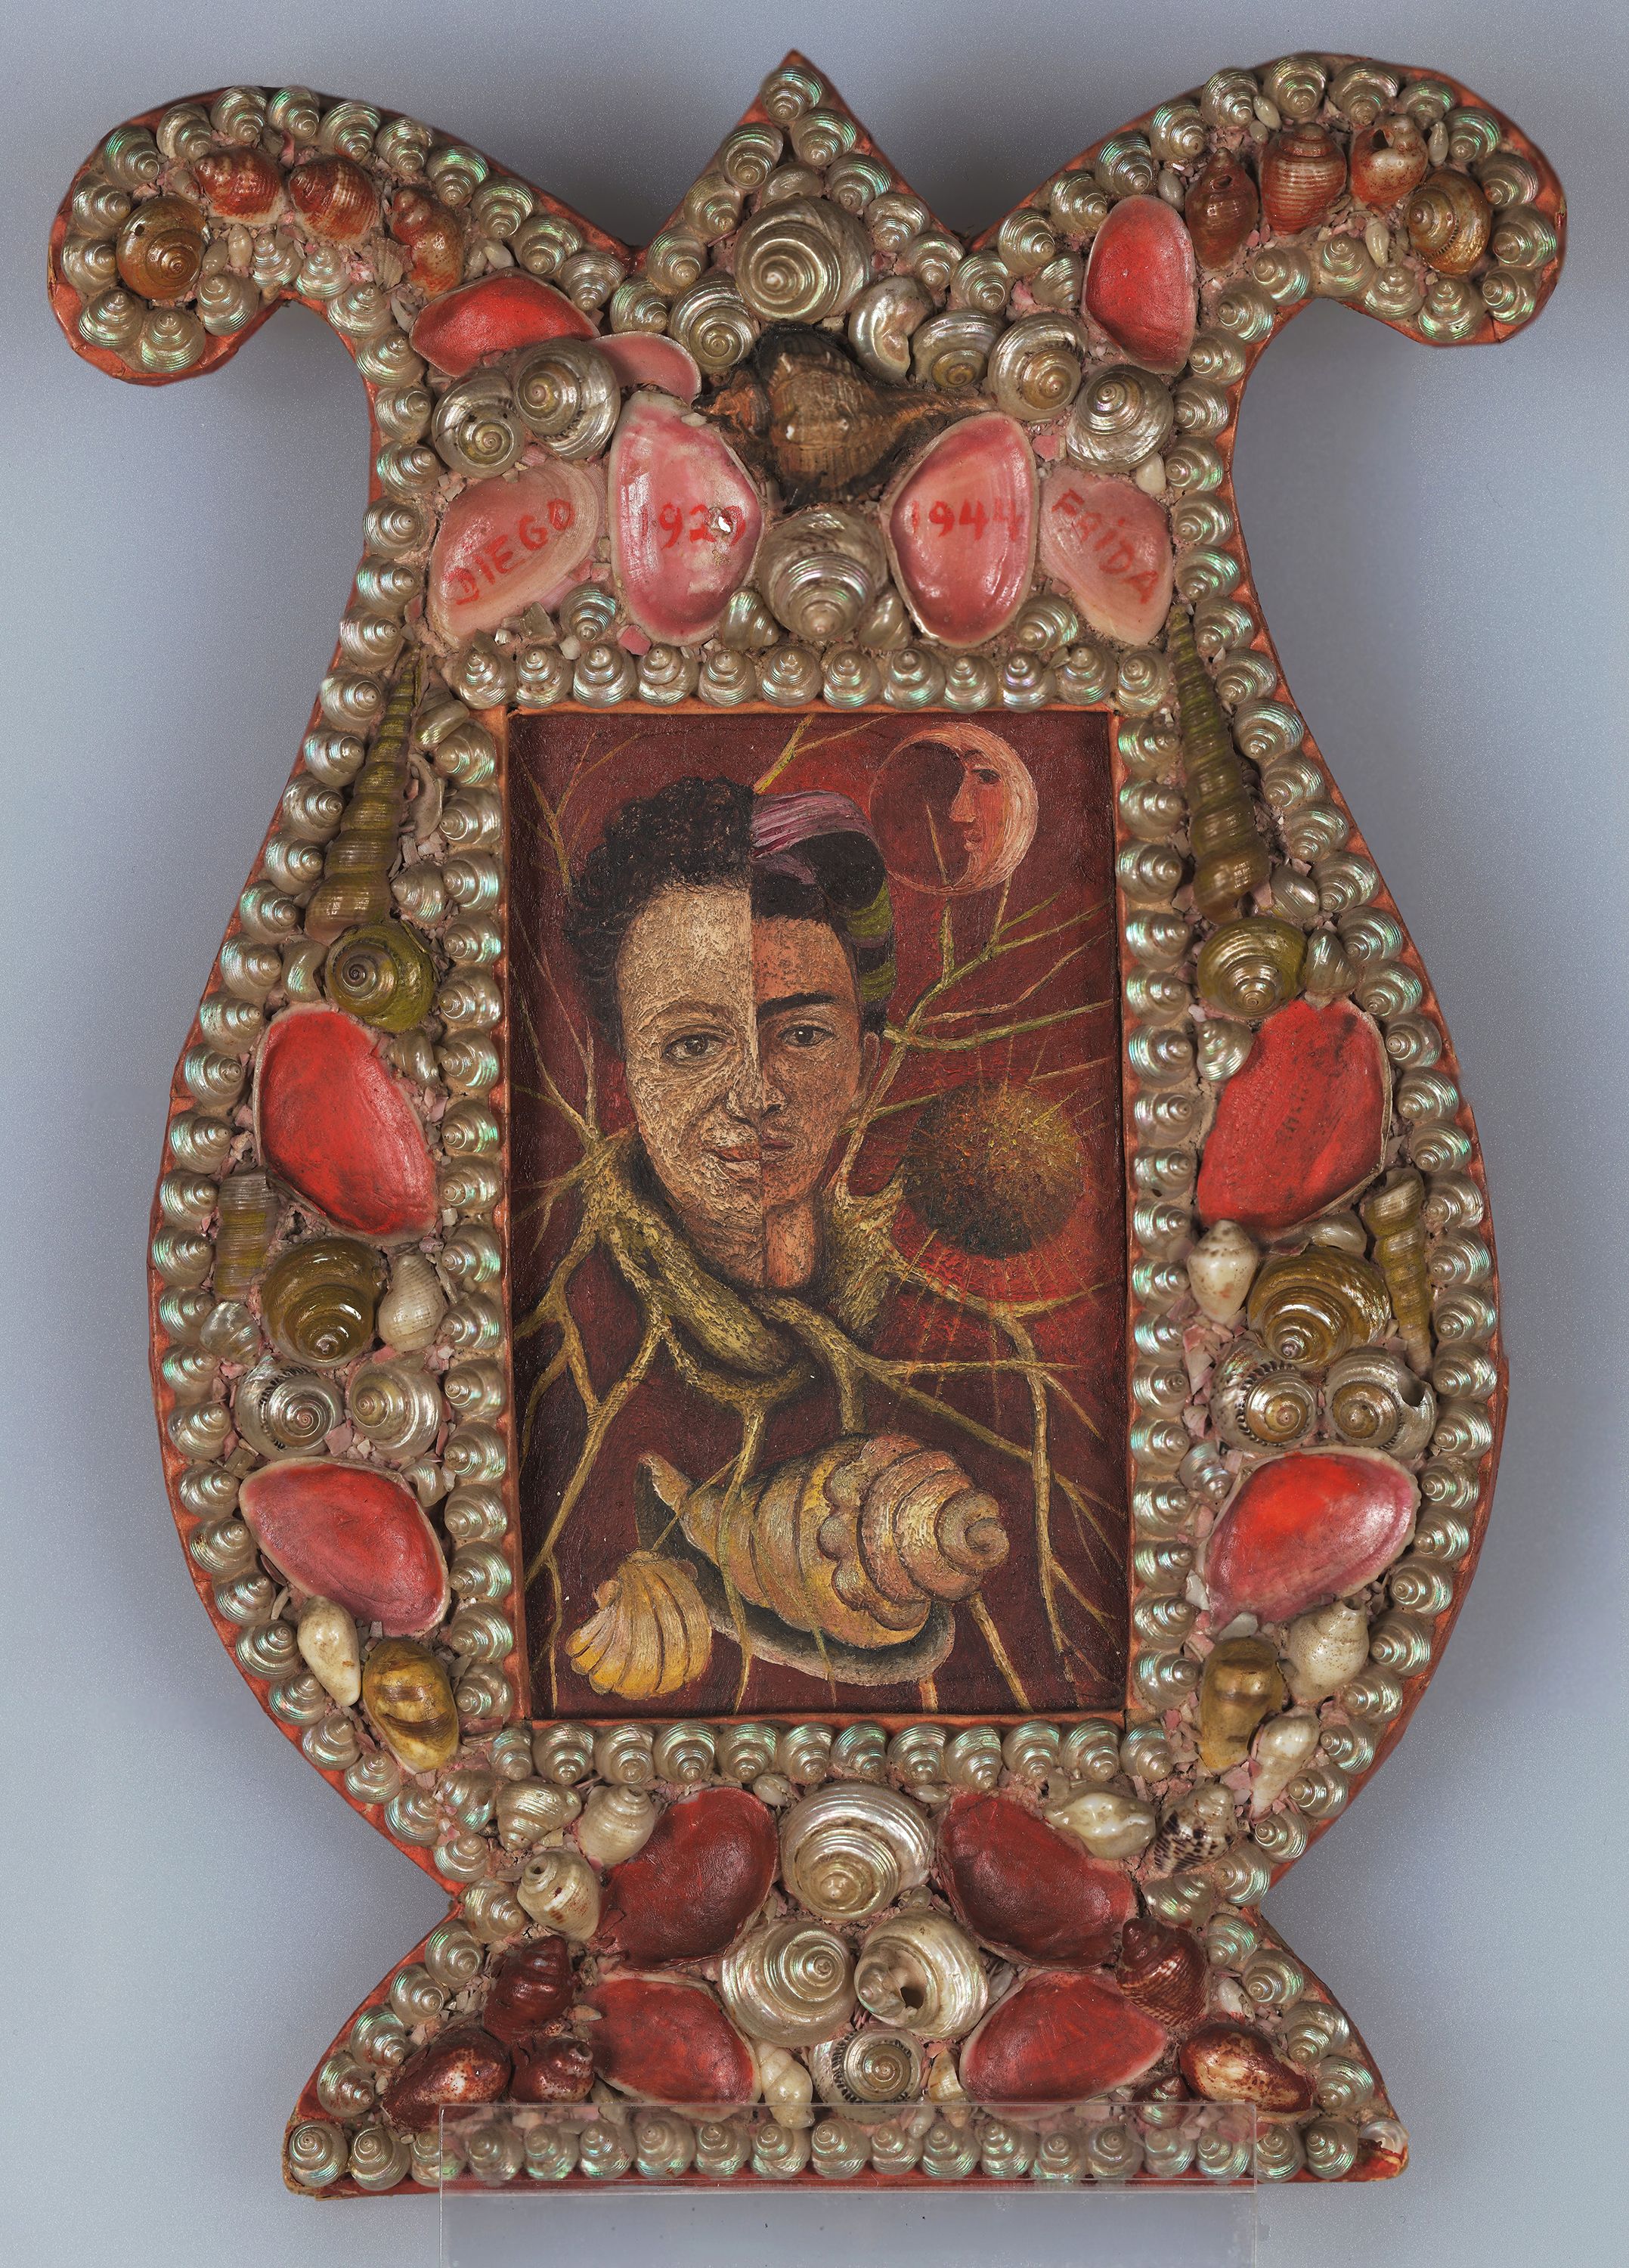 Diego és én, 1944 / Diego and I, 1944 olaj, farost / oil on masonite 12,3 × 7,4 cm Magángyűjtemény/Private Collection © Banco de Mexico, Diego Rivera Frida Kahlo Museums Trust, Mexico, D.F. by SIAE 2018